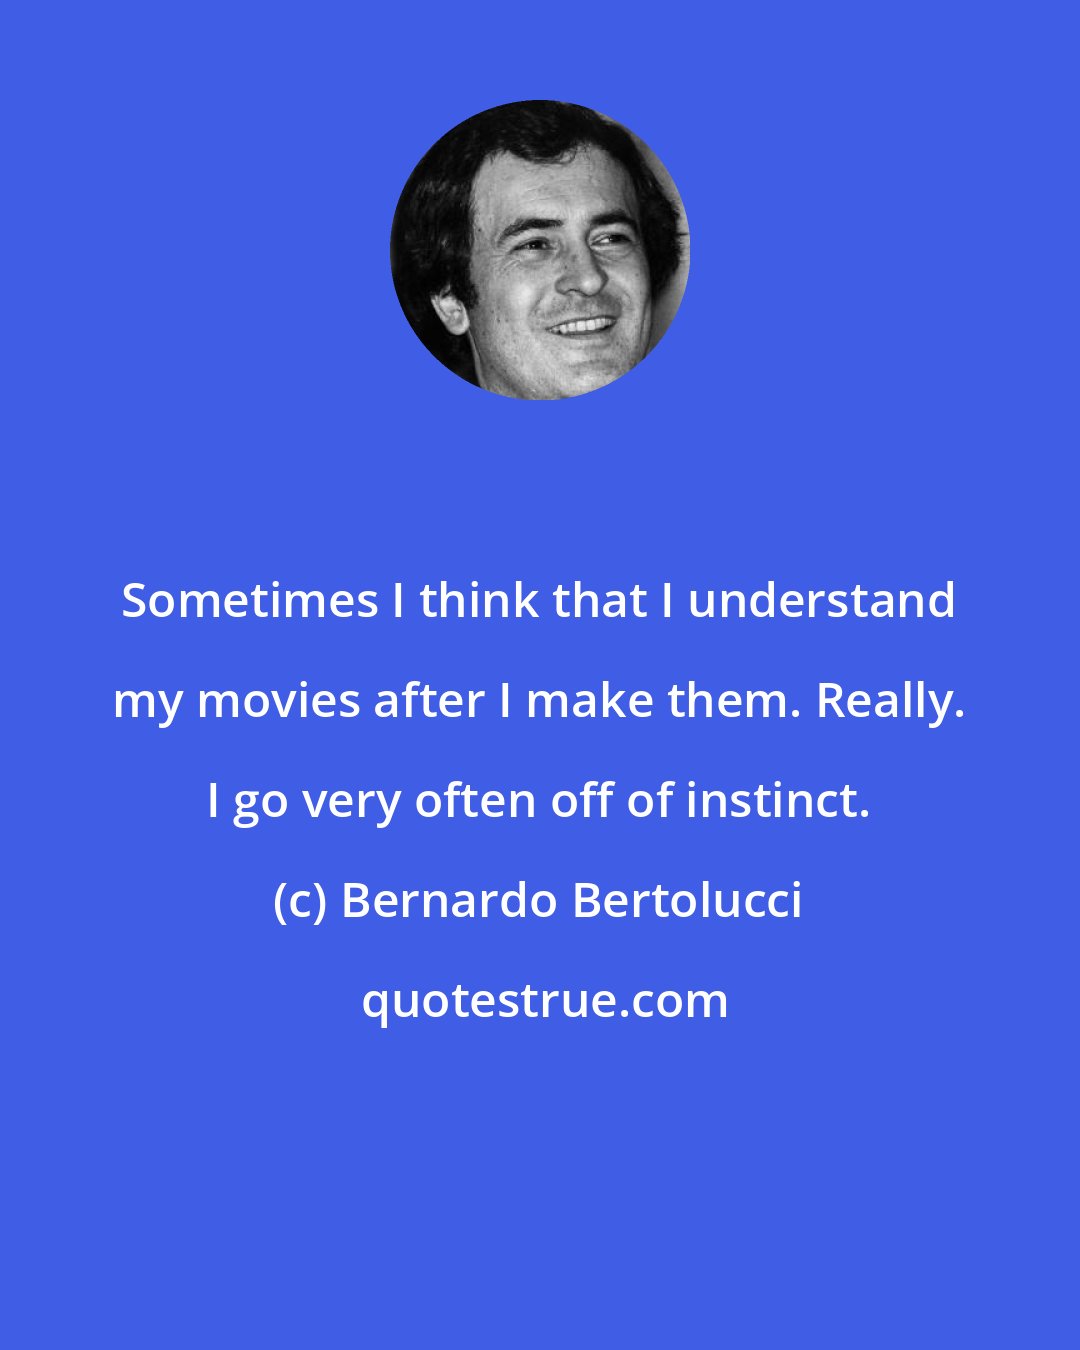 Bernardo Bertolucci: Sometimes I think that I understand my movies after I make them. Really. I go very often off of instinct.